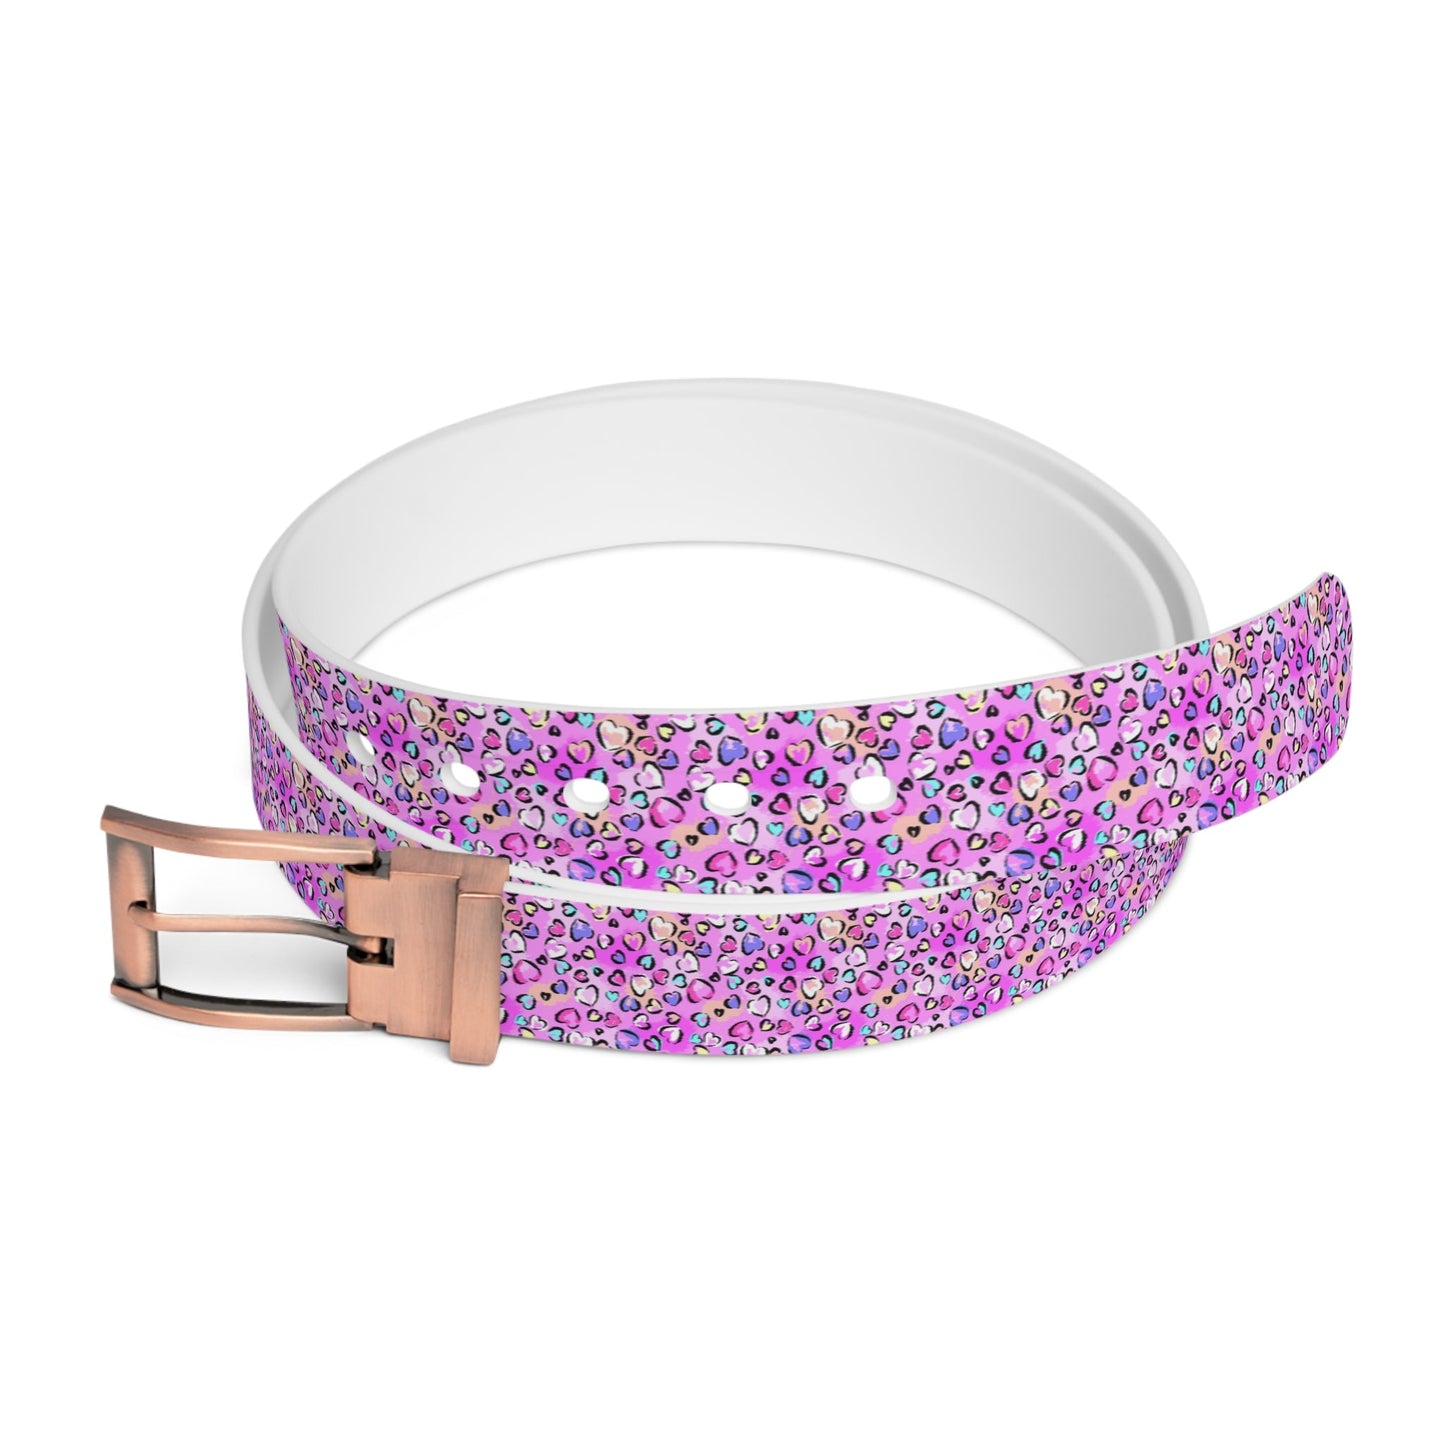 Pink Leopard Belt - Accessories - Epileptic Al’s Shop